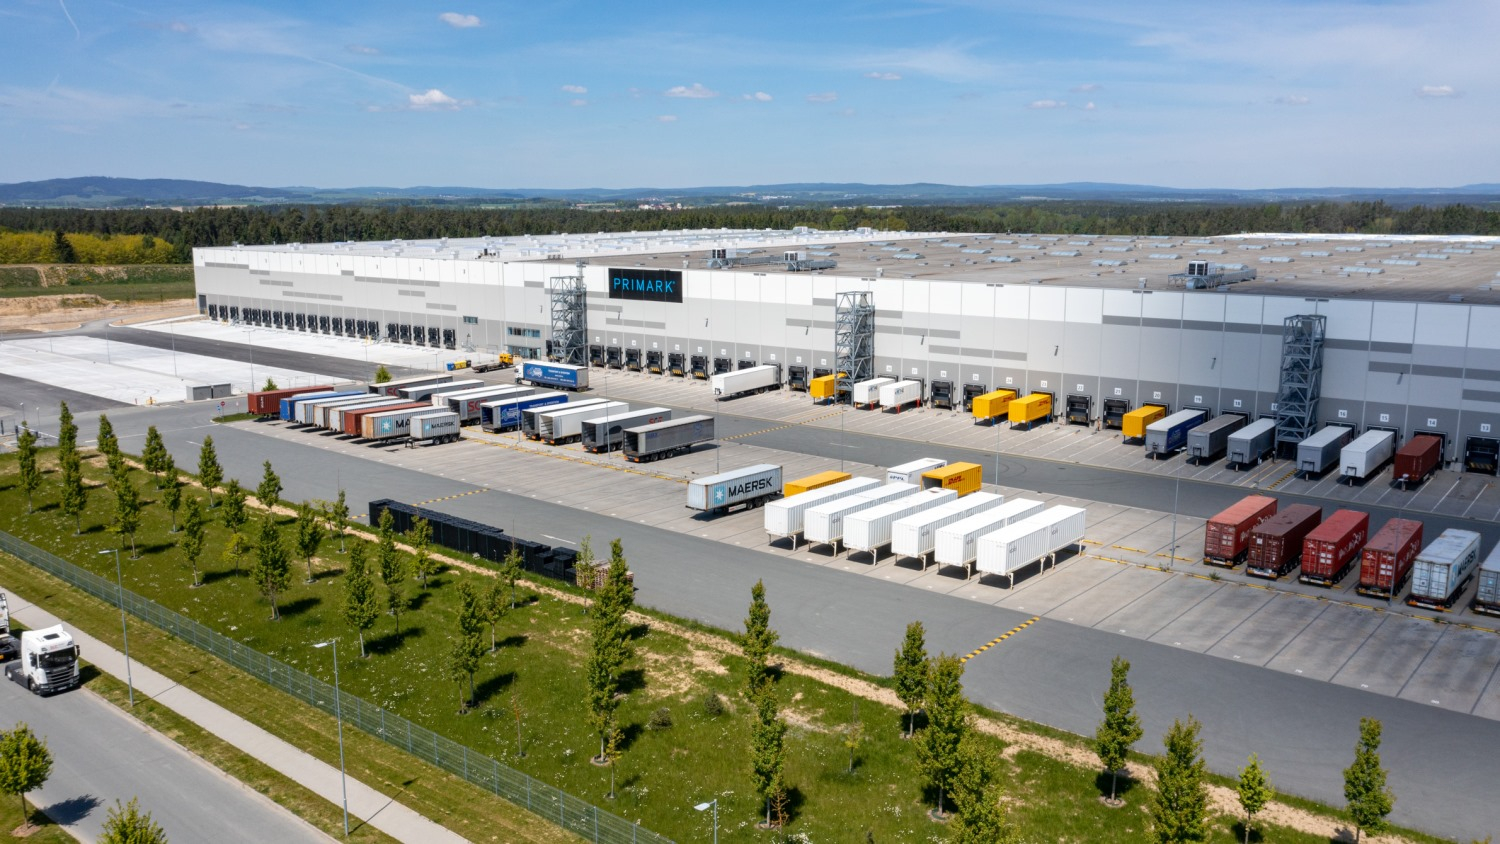 News Article CTP Czech Republic industrial lease logistics Primark